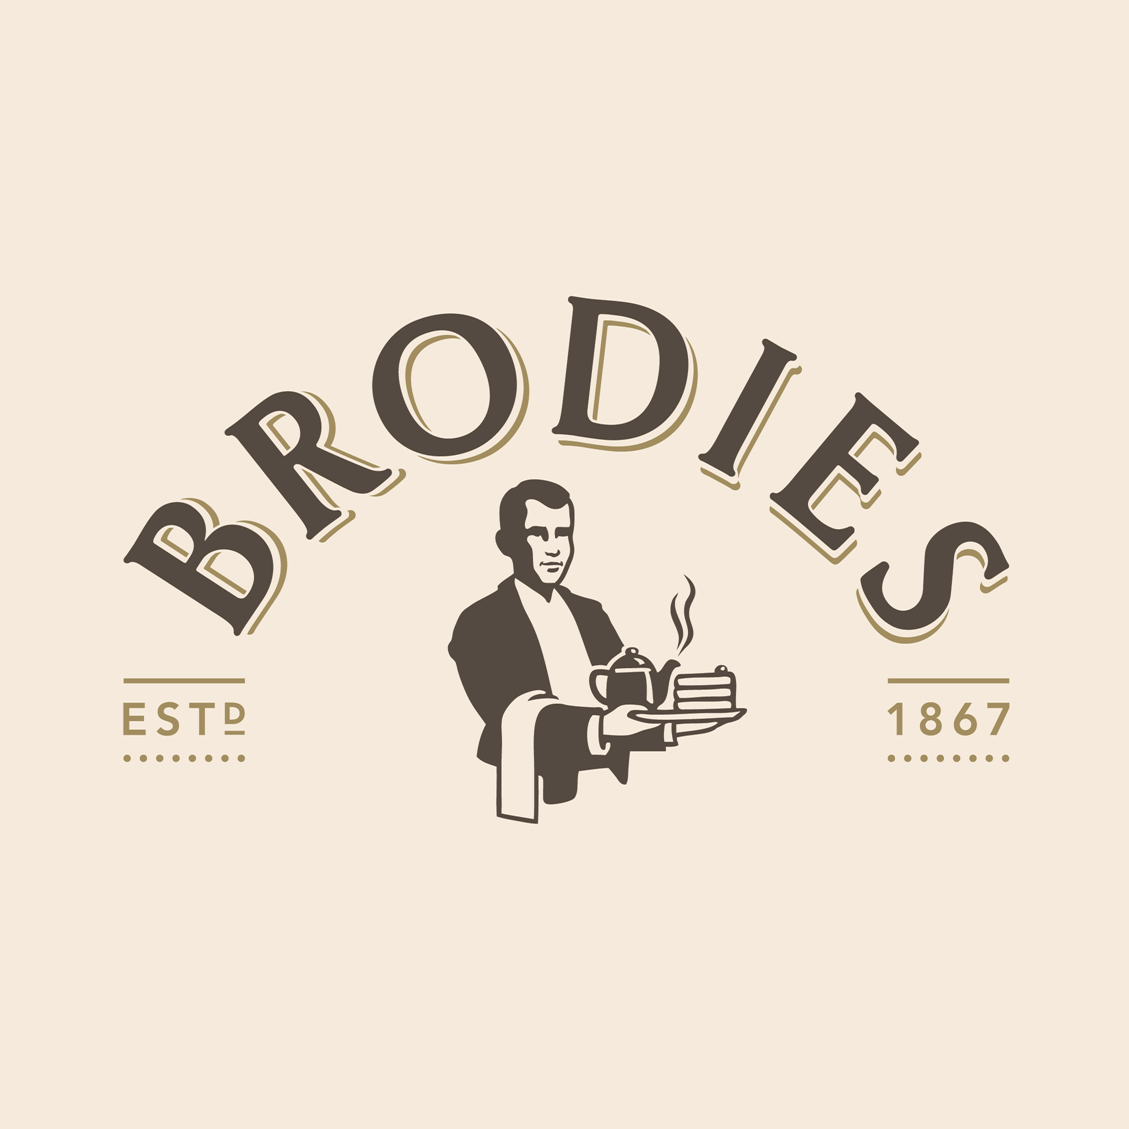 Brodies brand logo